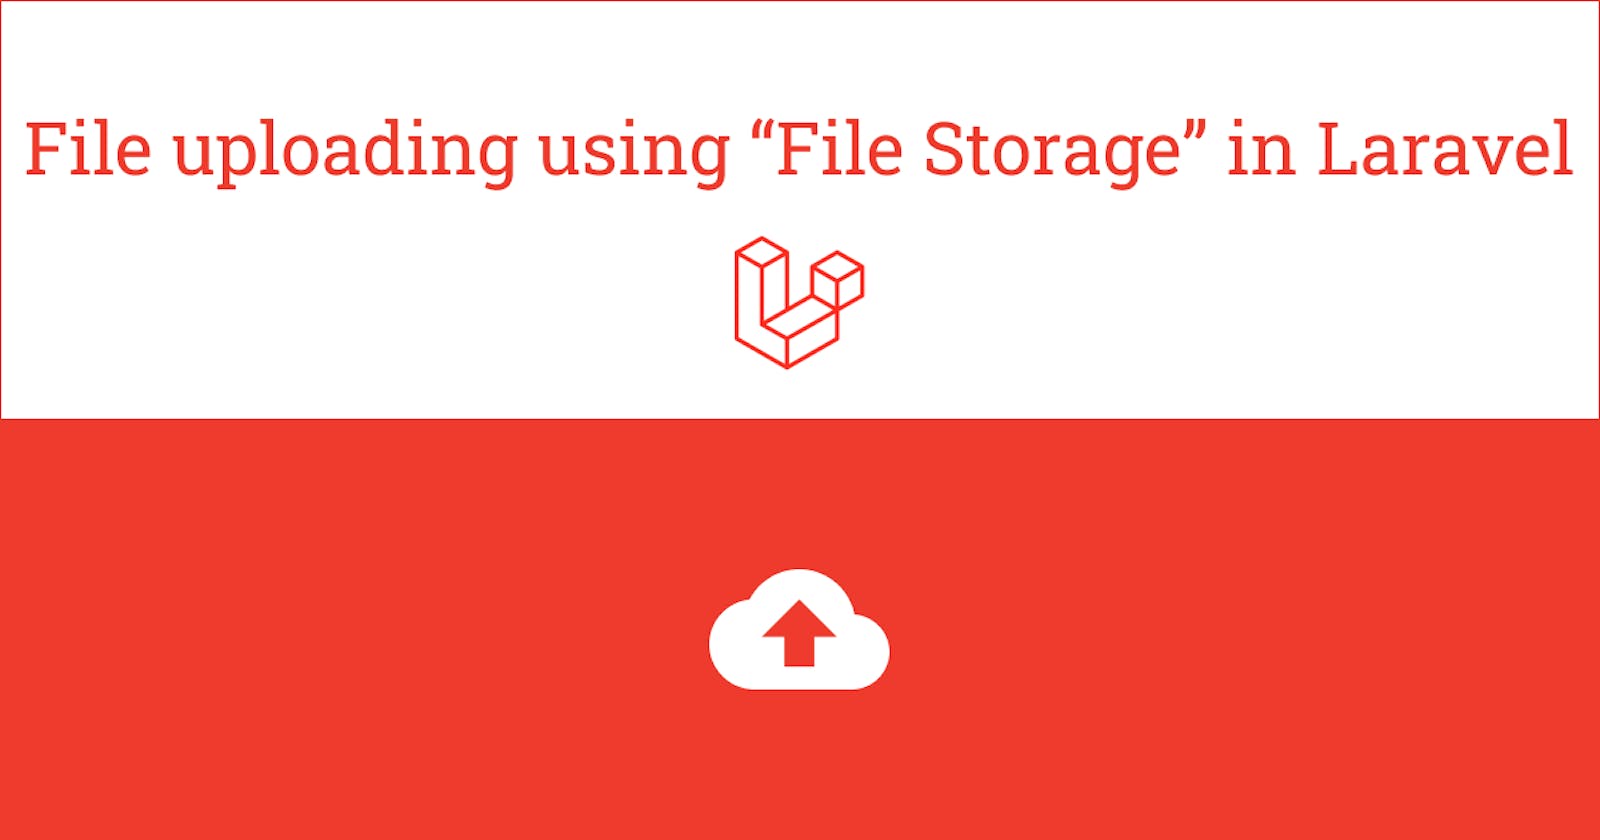 File upload using File Storage in Laravel